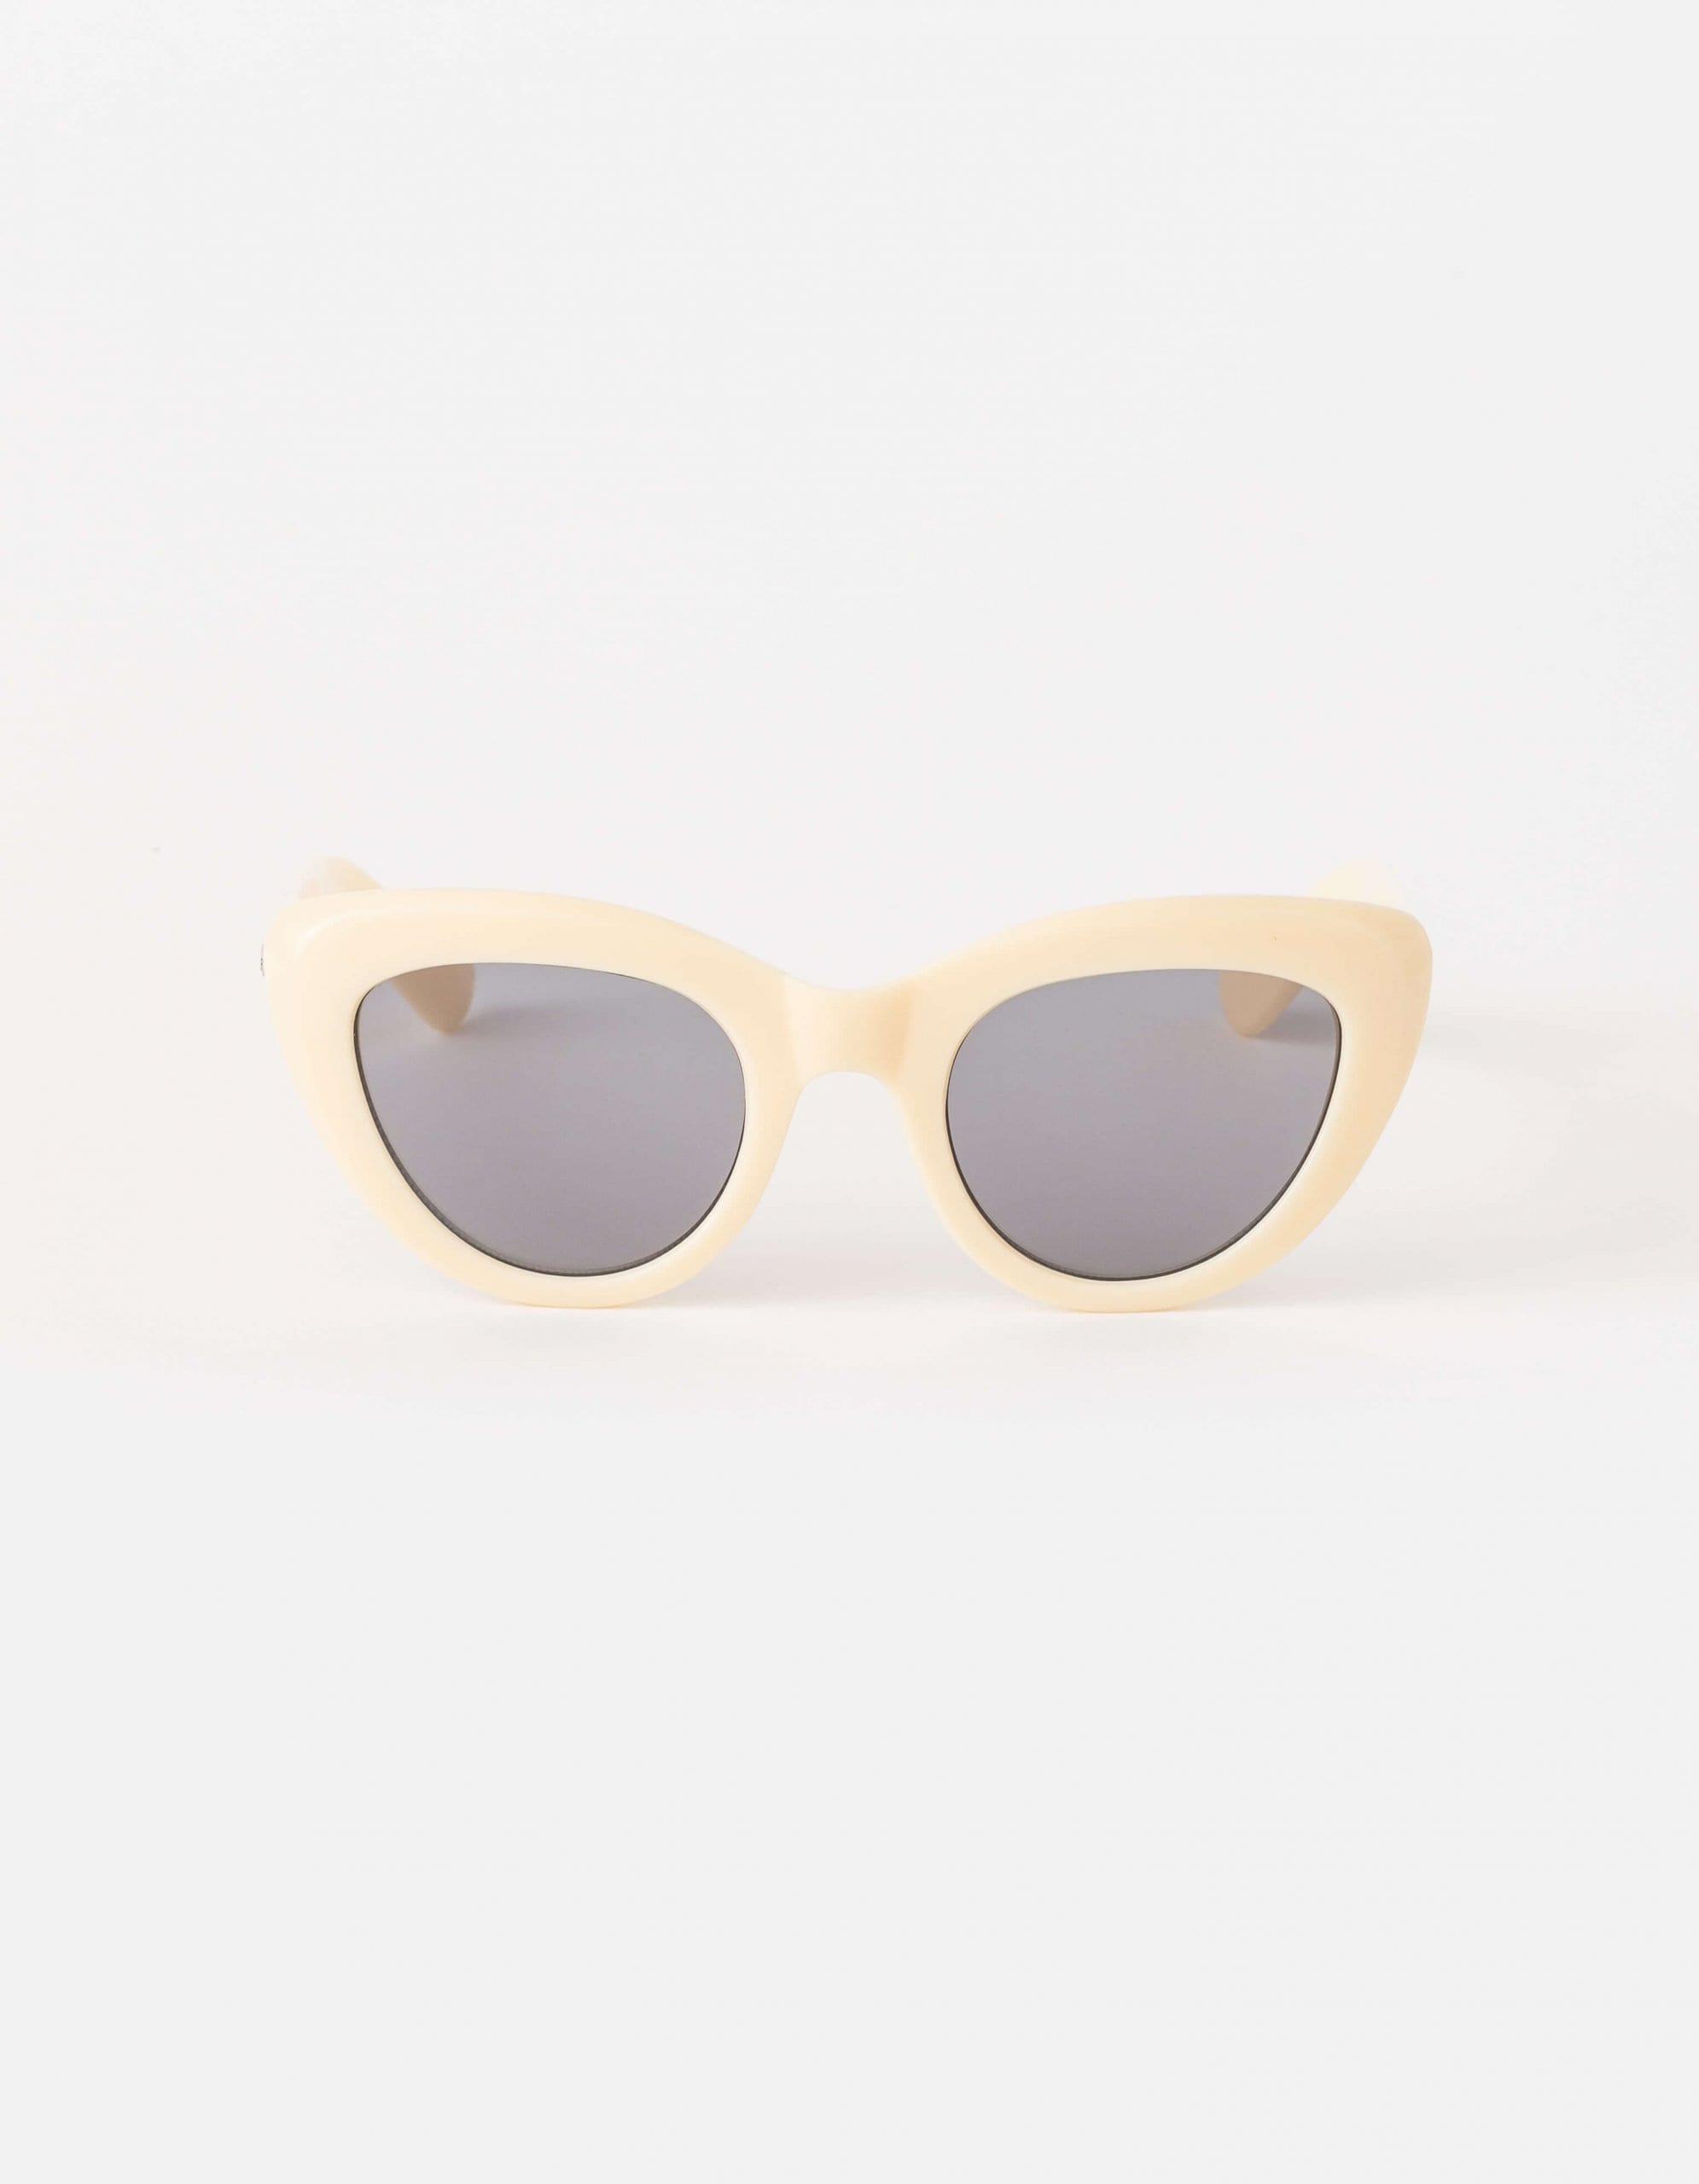 Gia Sunglasses Powder Ivory-Accessories-Stella & Gemma-The Bay Room